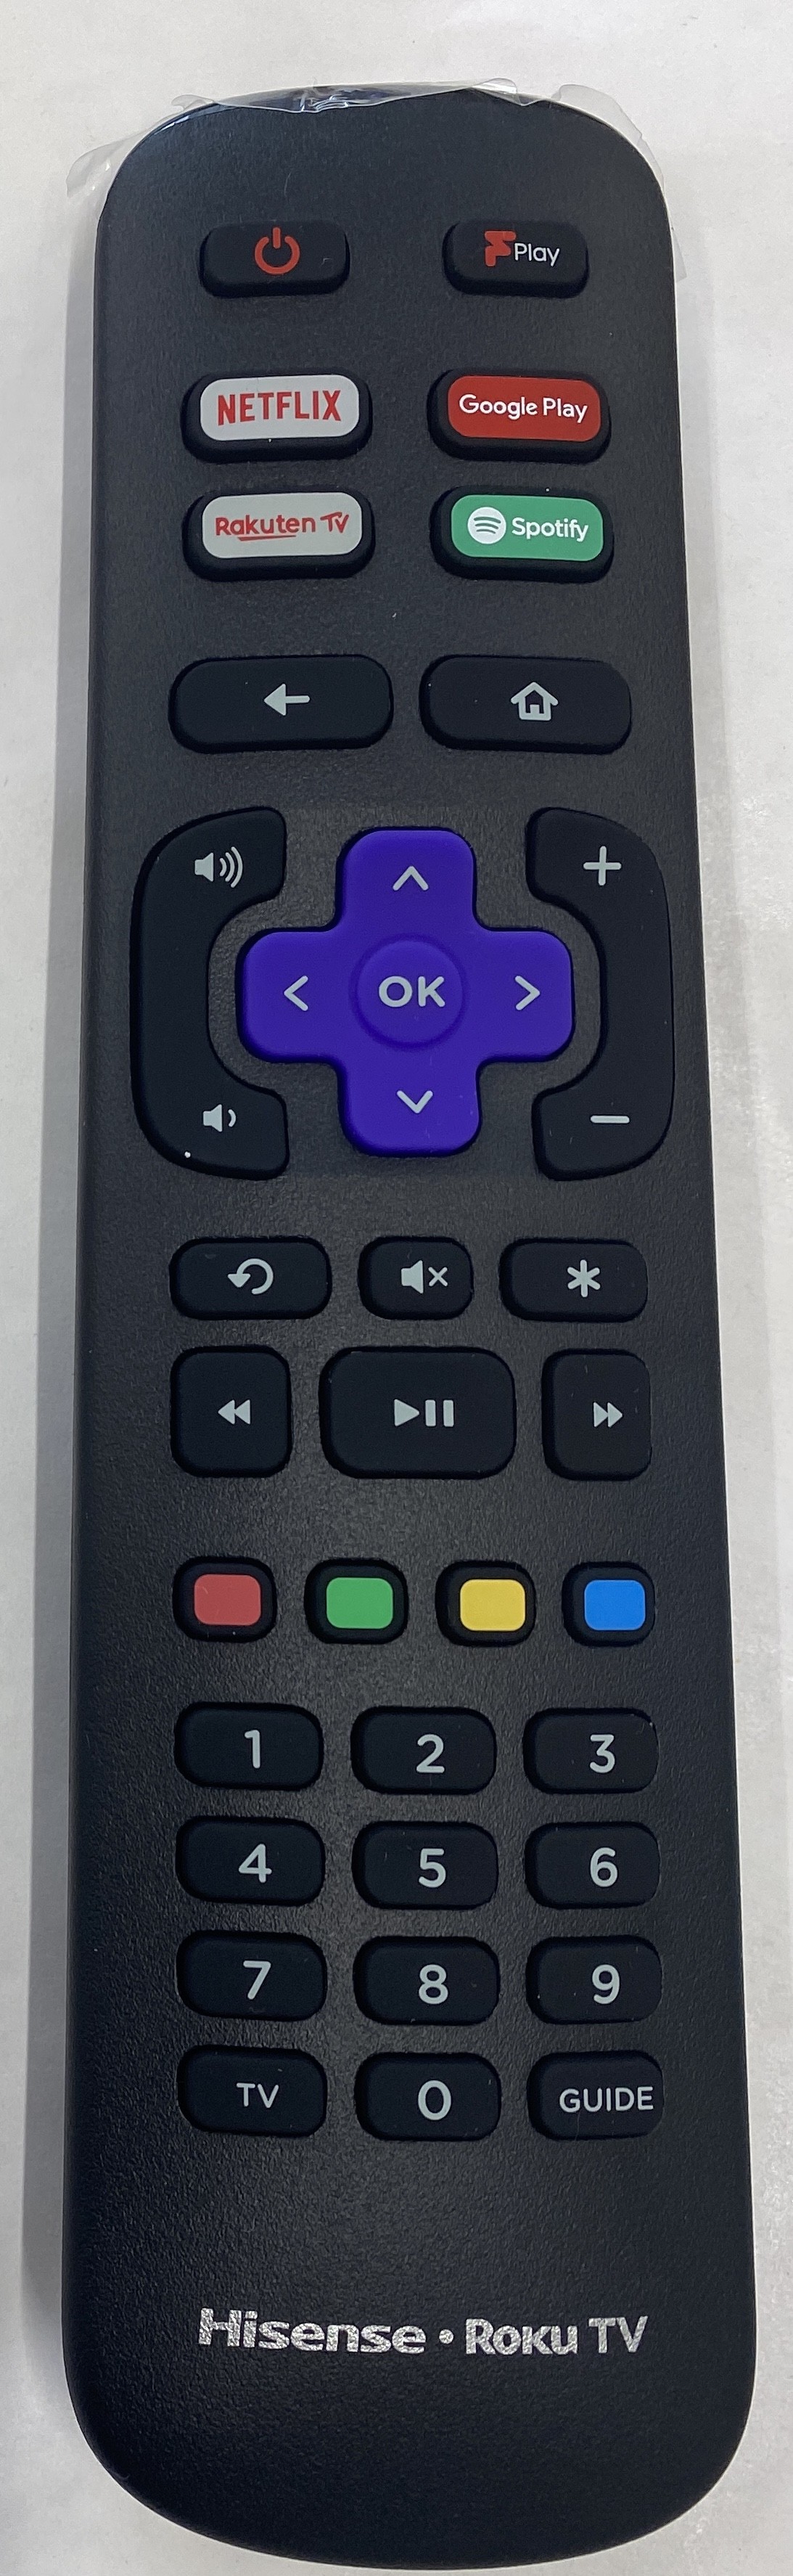 HISENSE ROKU TV Remote Control Original